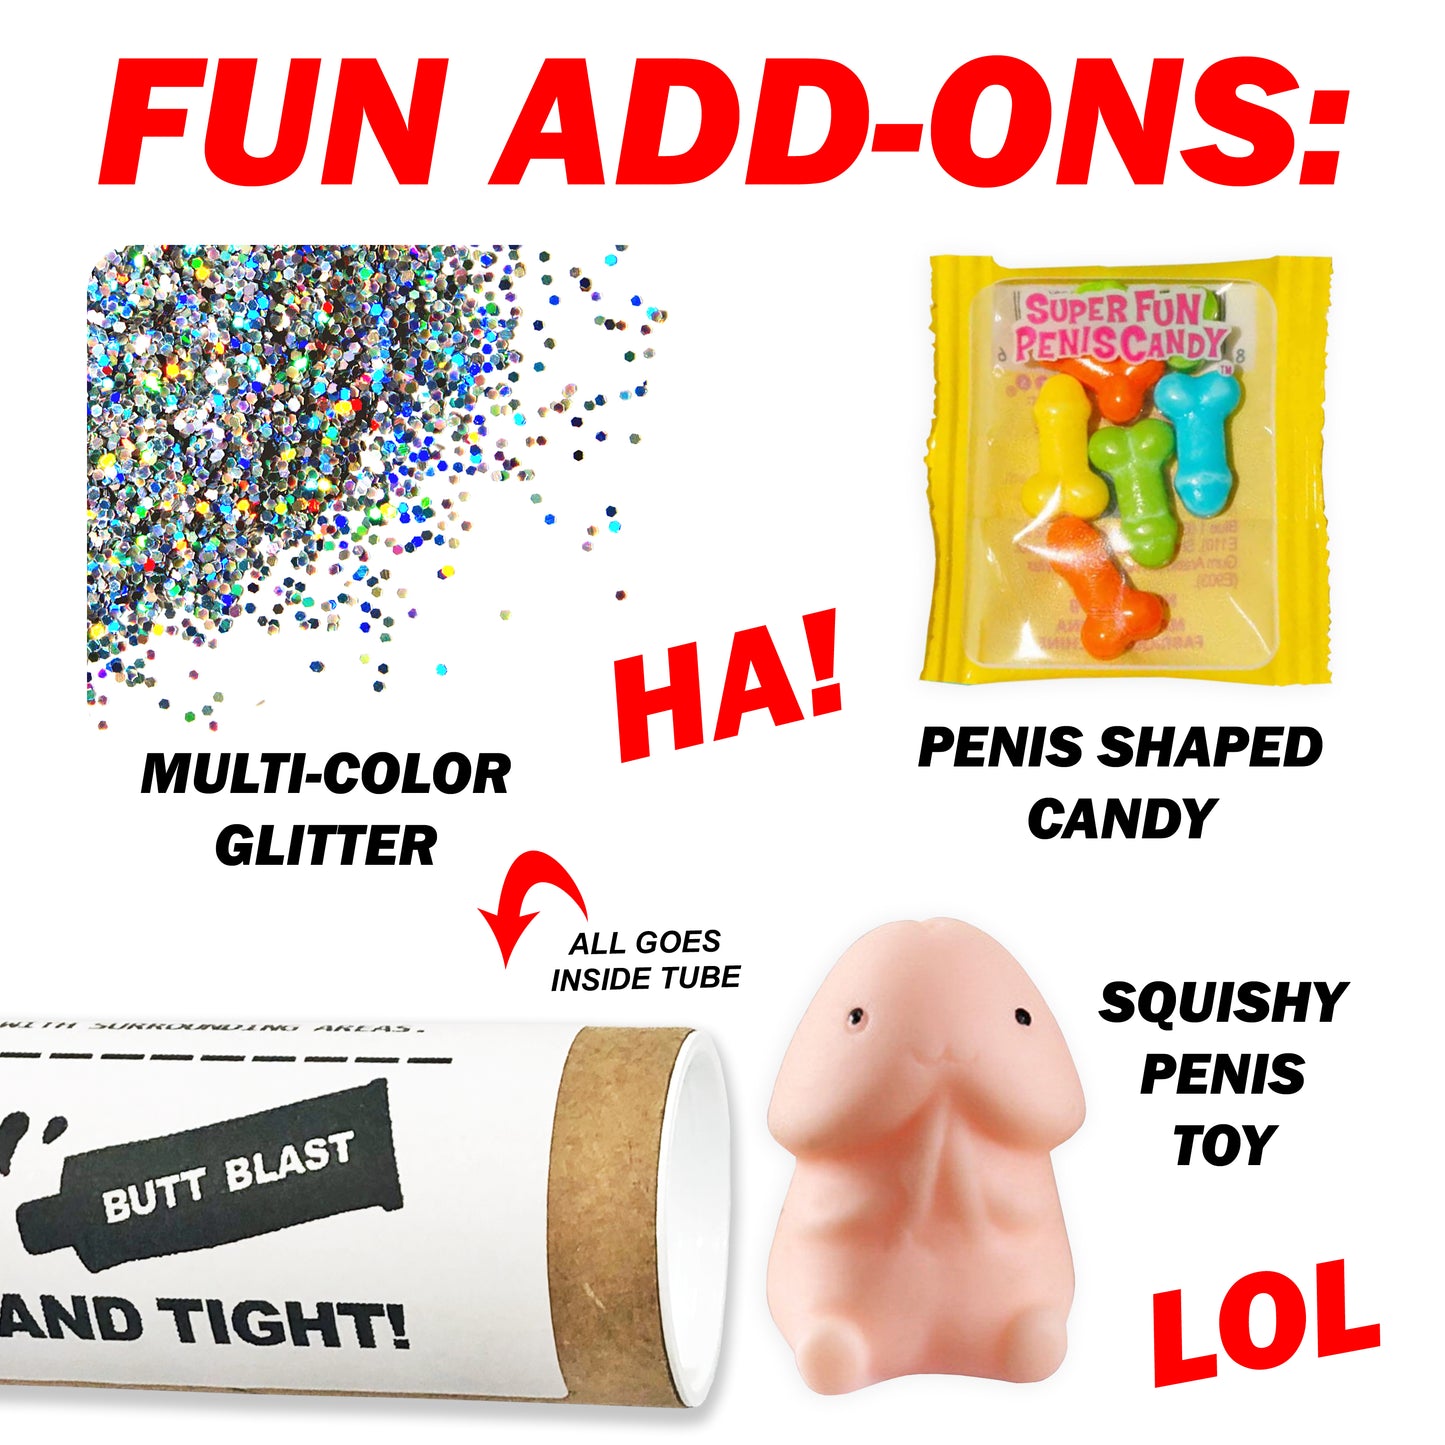 Anal Bleaching Kit Hilarious Add Ons